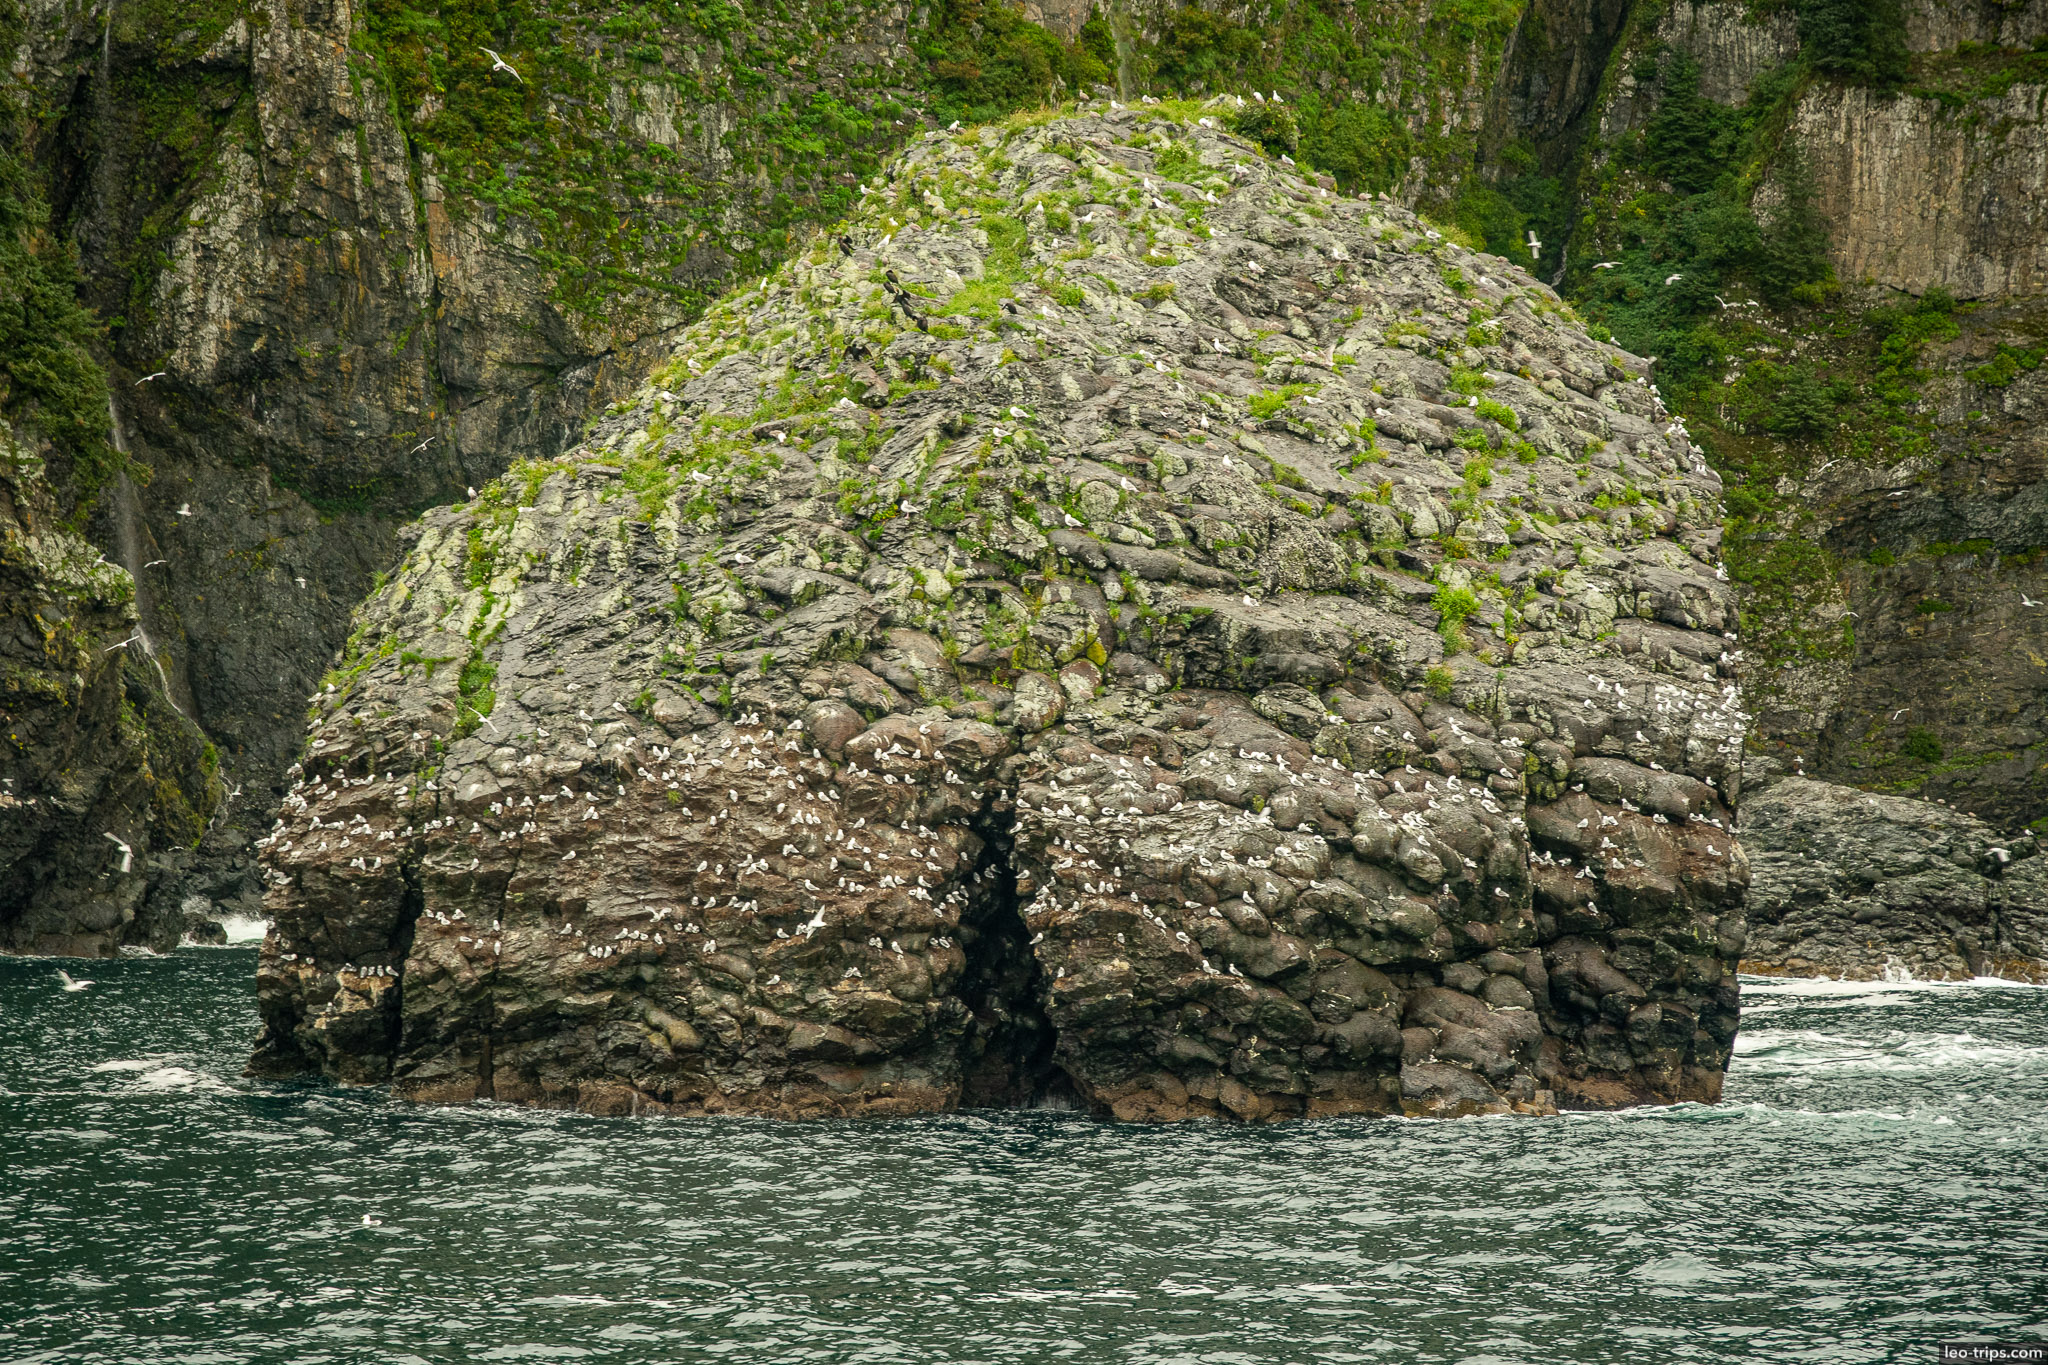 Rocky island with Seagulls resurrection bay